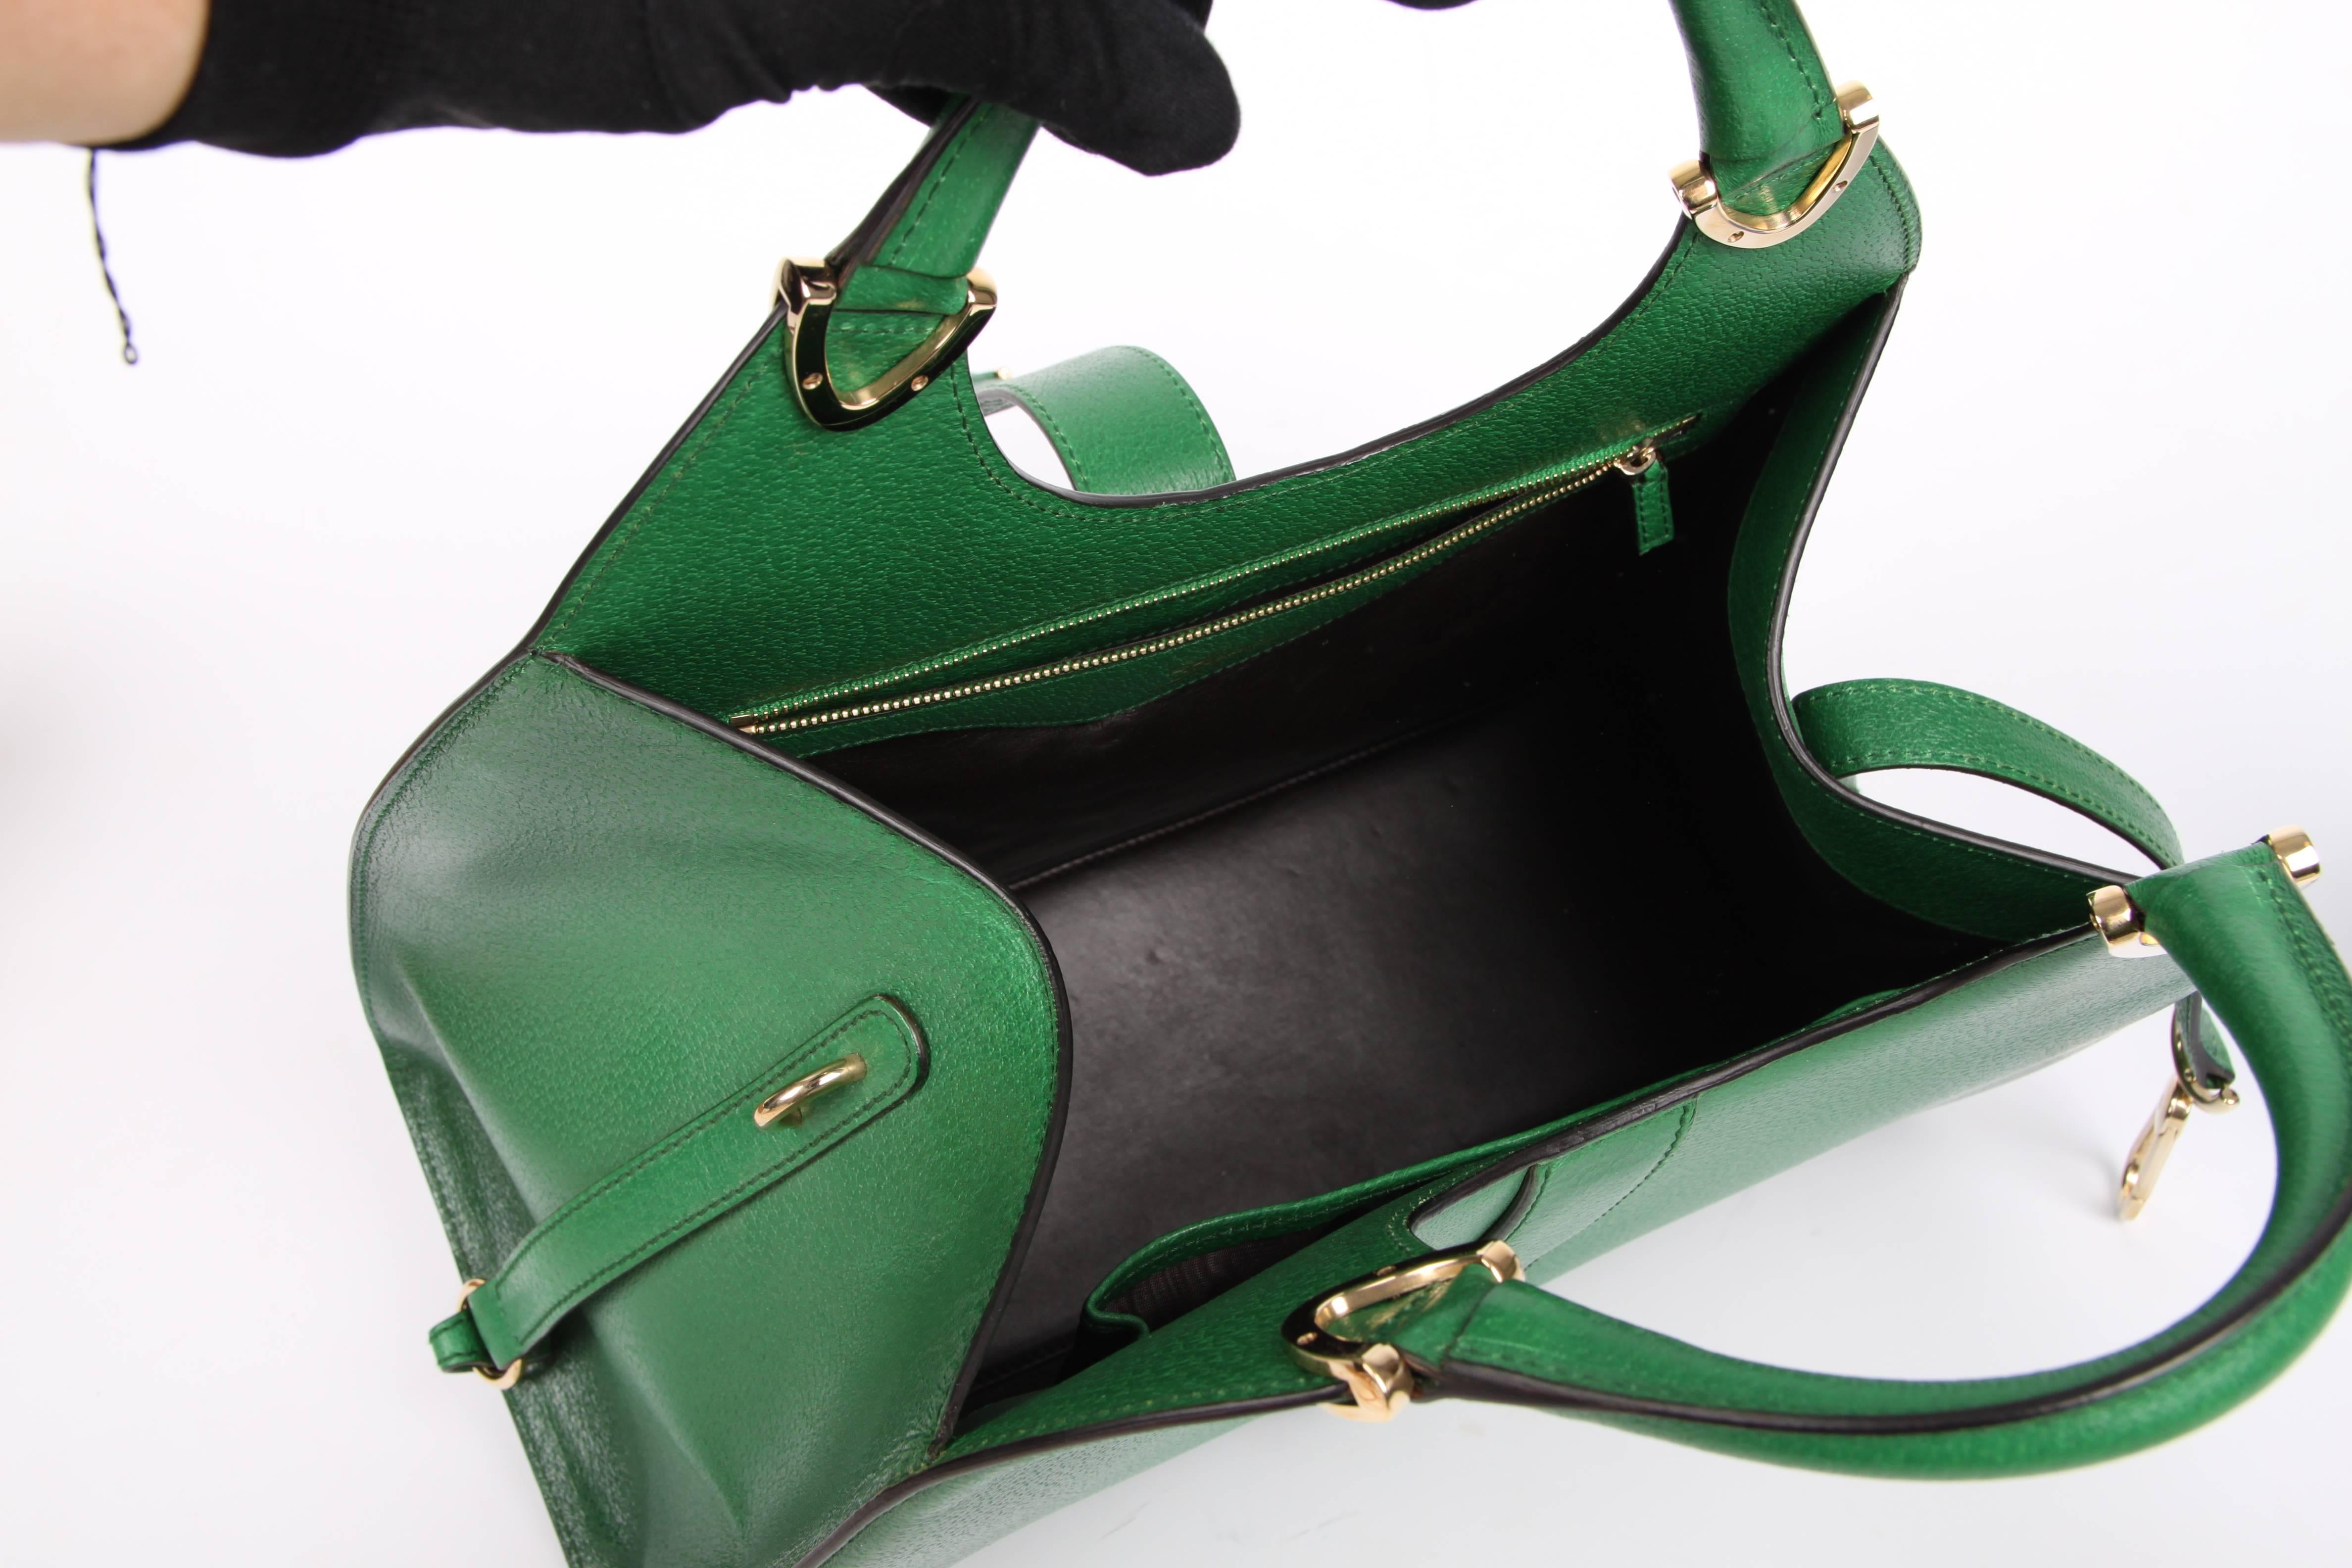   Gucci Stirrup Top Handle Bag - green   Gucci Stirrup Top Handle Bag - green    5